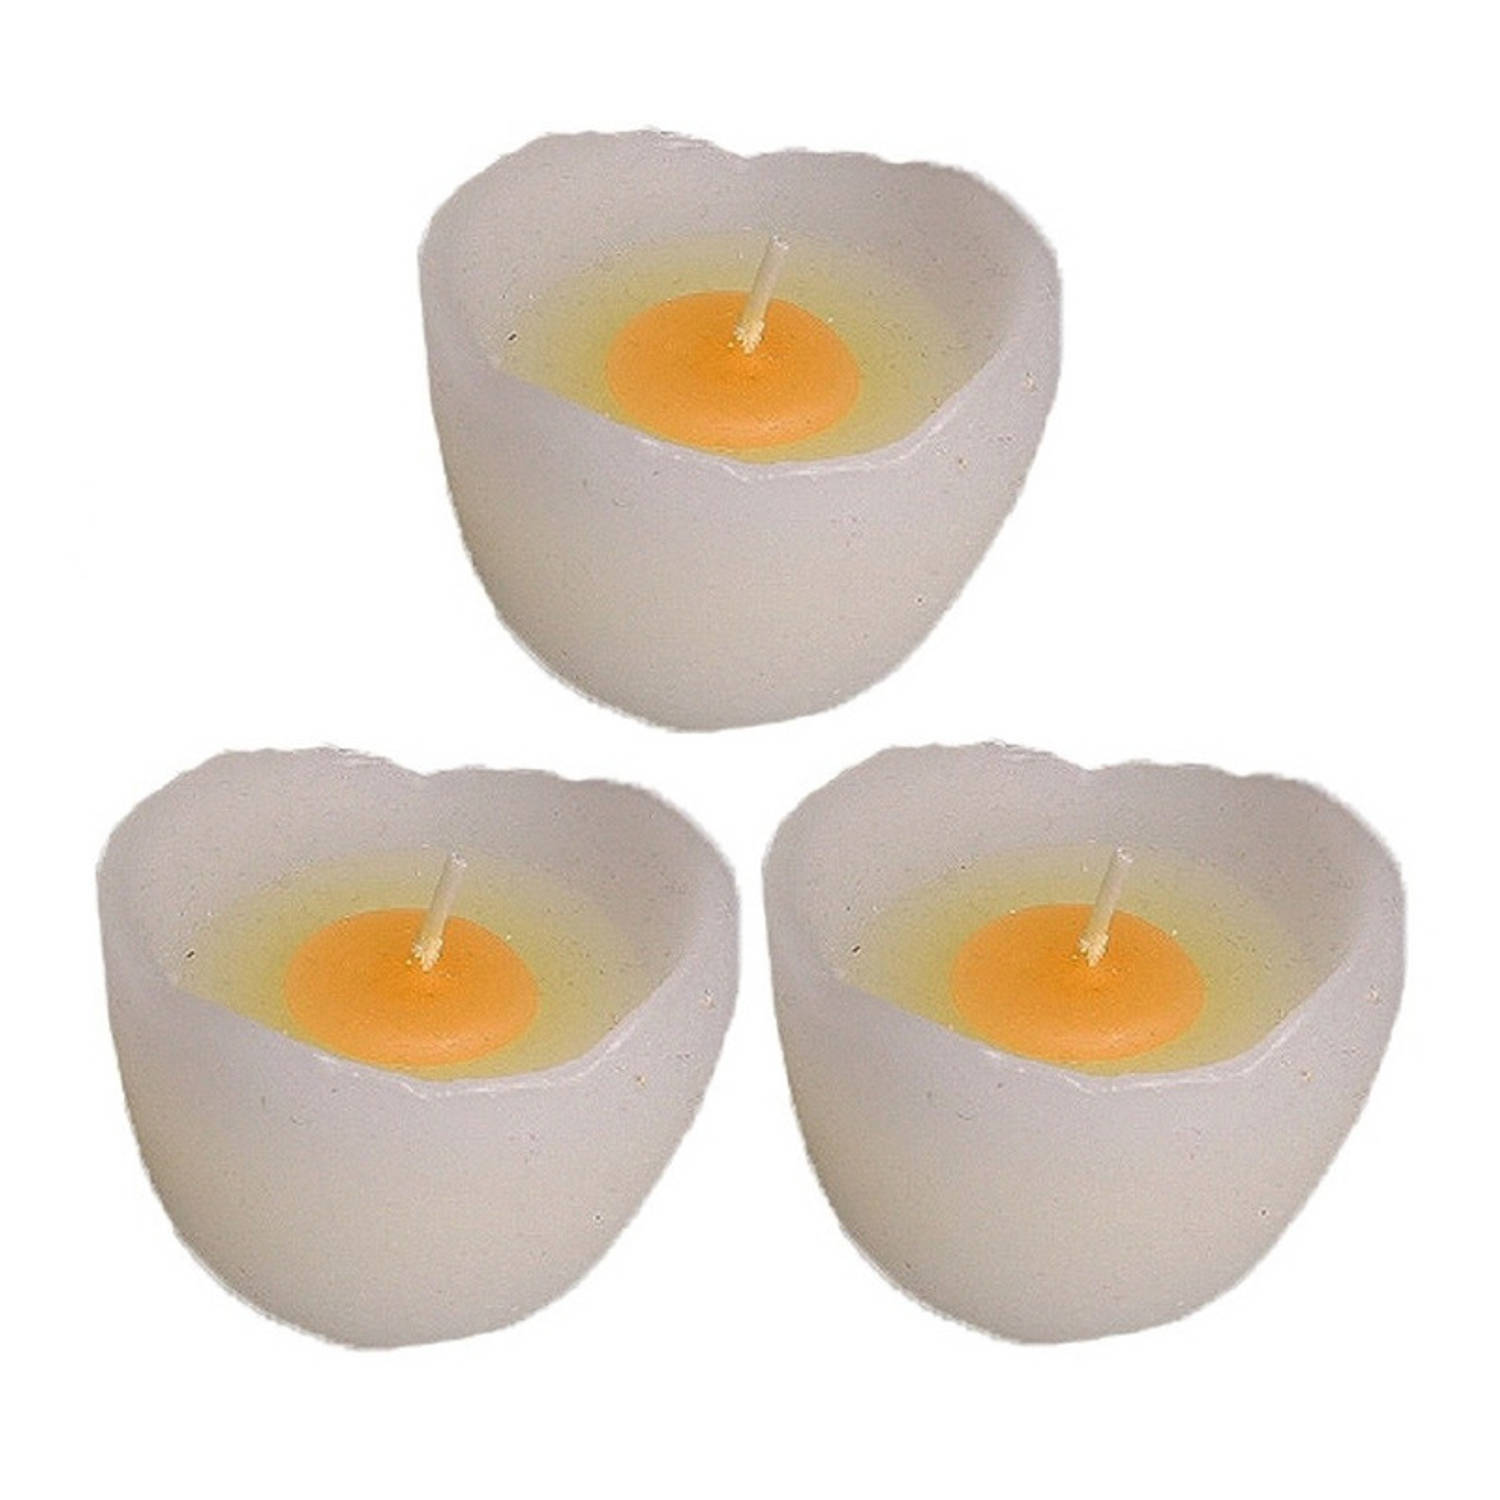 3x Witte eieren kaarsjes 5 - Kaarsen Blokker